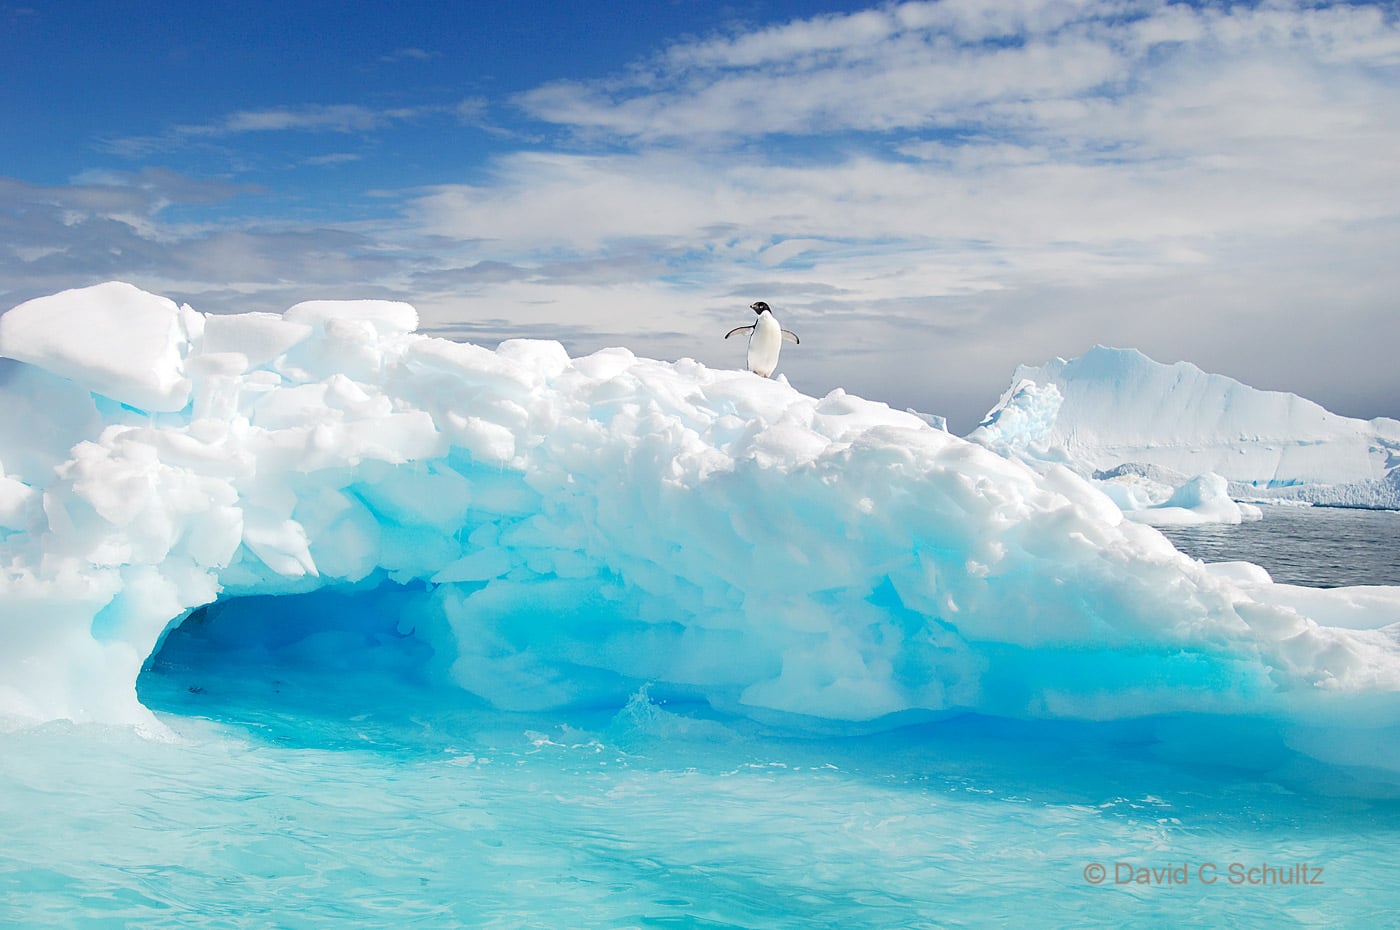 Adelie penguin on an iceberg in Antarctica - Image #163-368